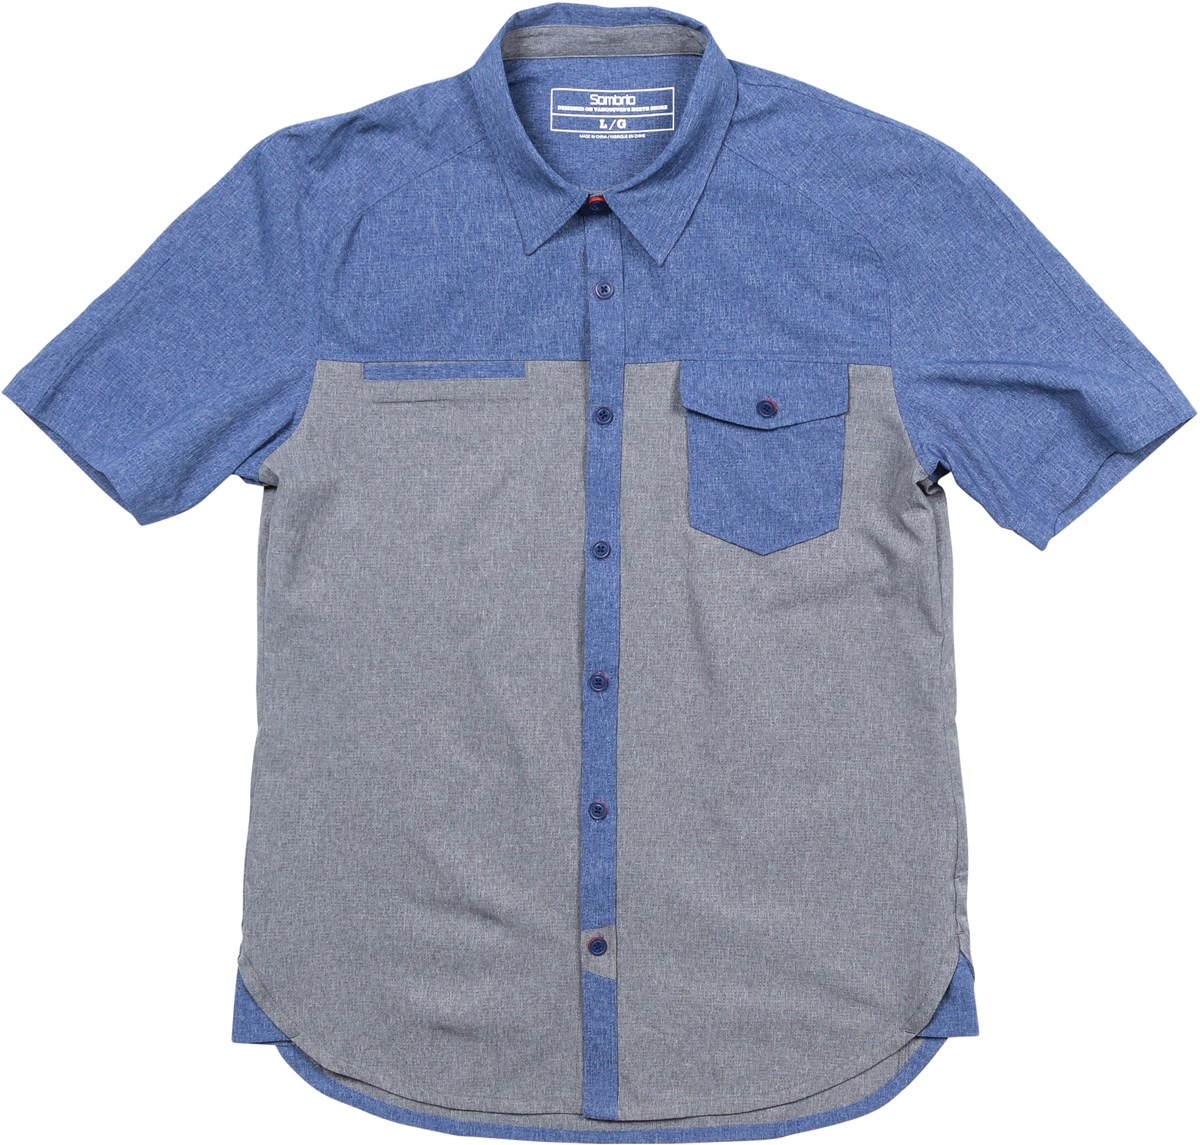 Sombrio Shore Short Sleeve Shirt SS16 product image